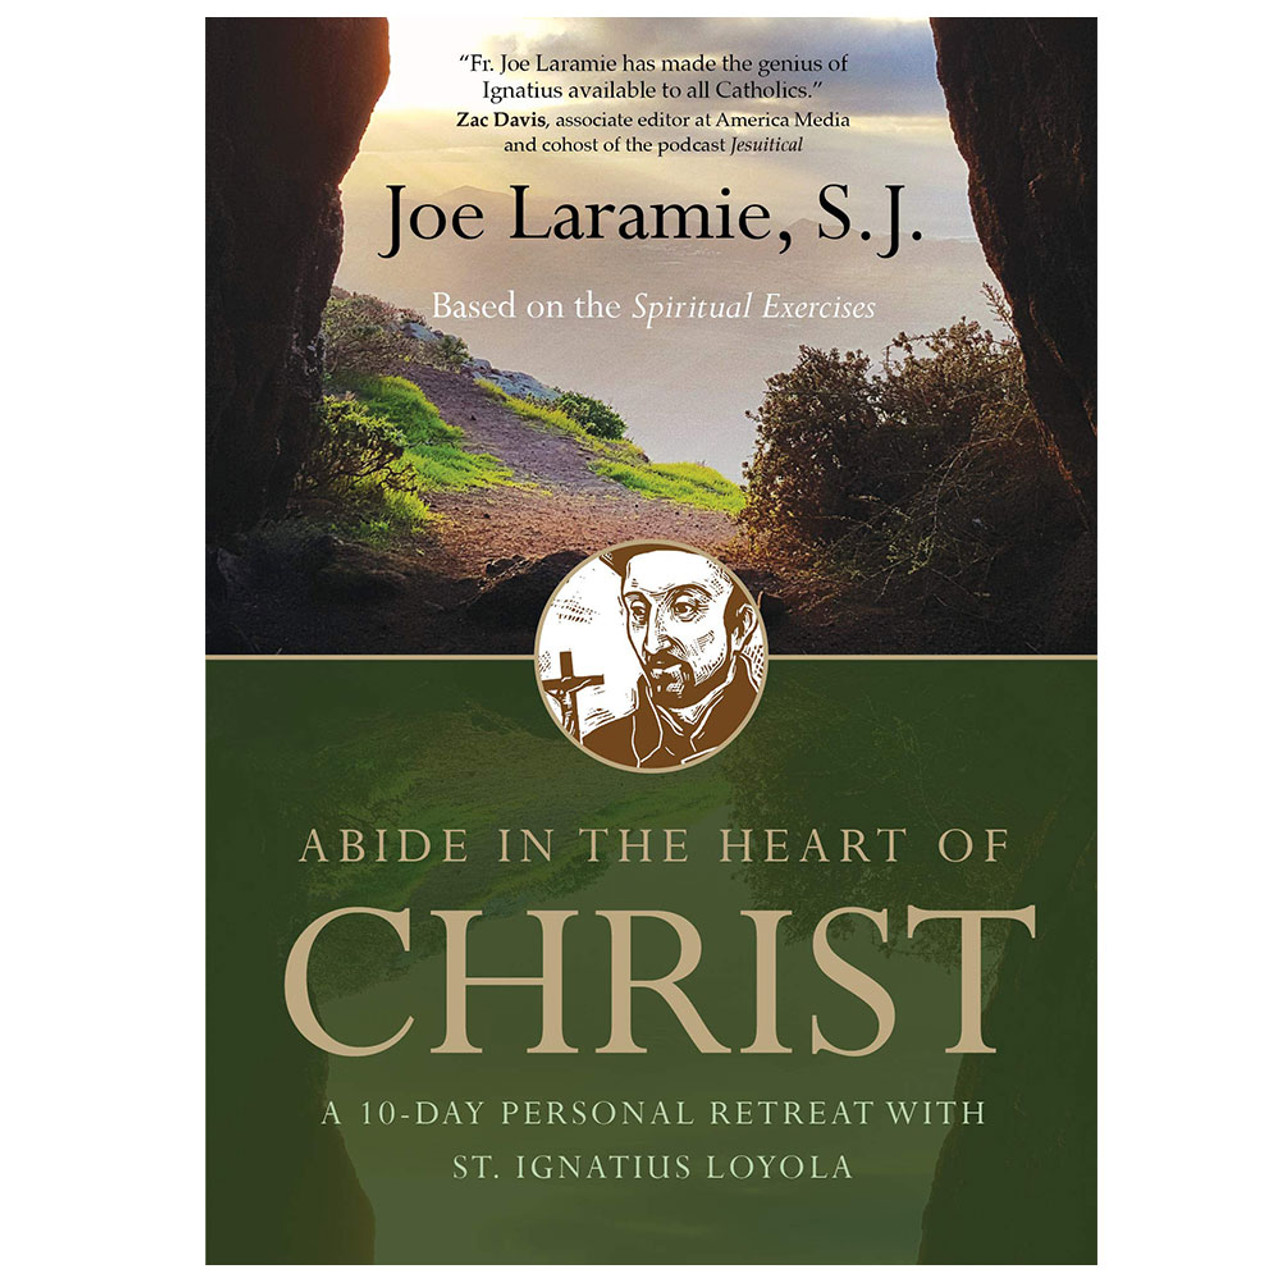 Abide in the Heart of Christ by Joe Laramie